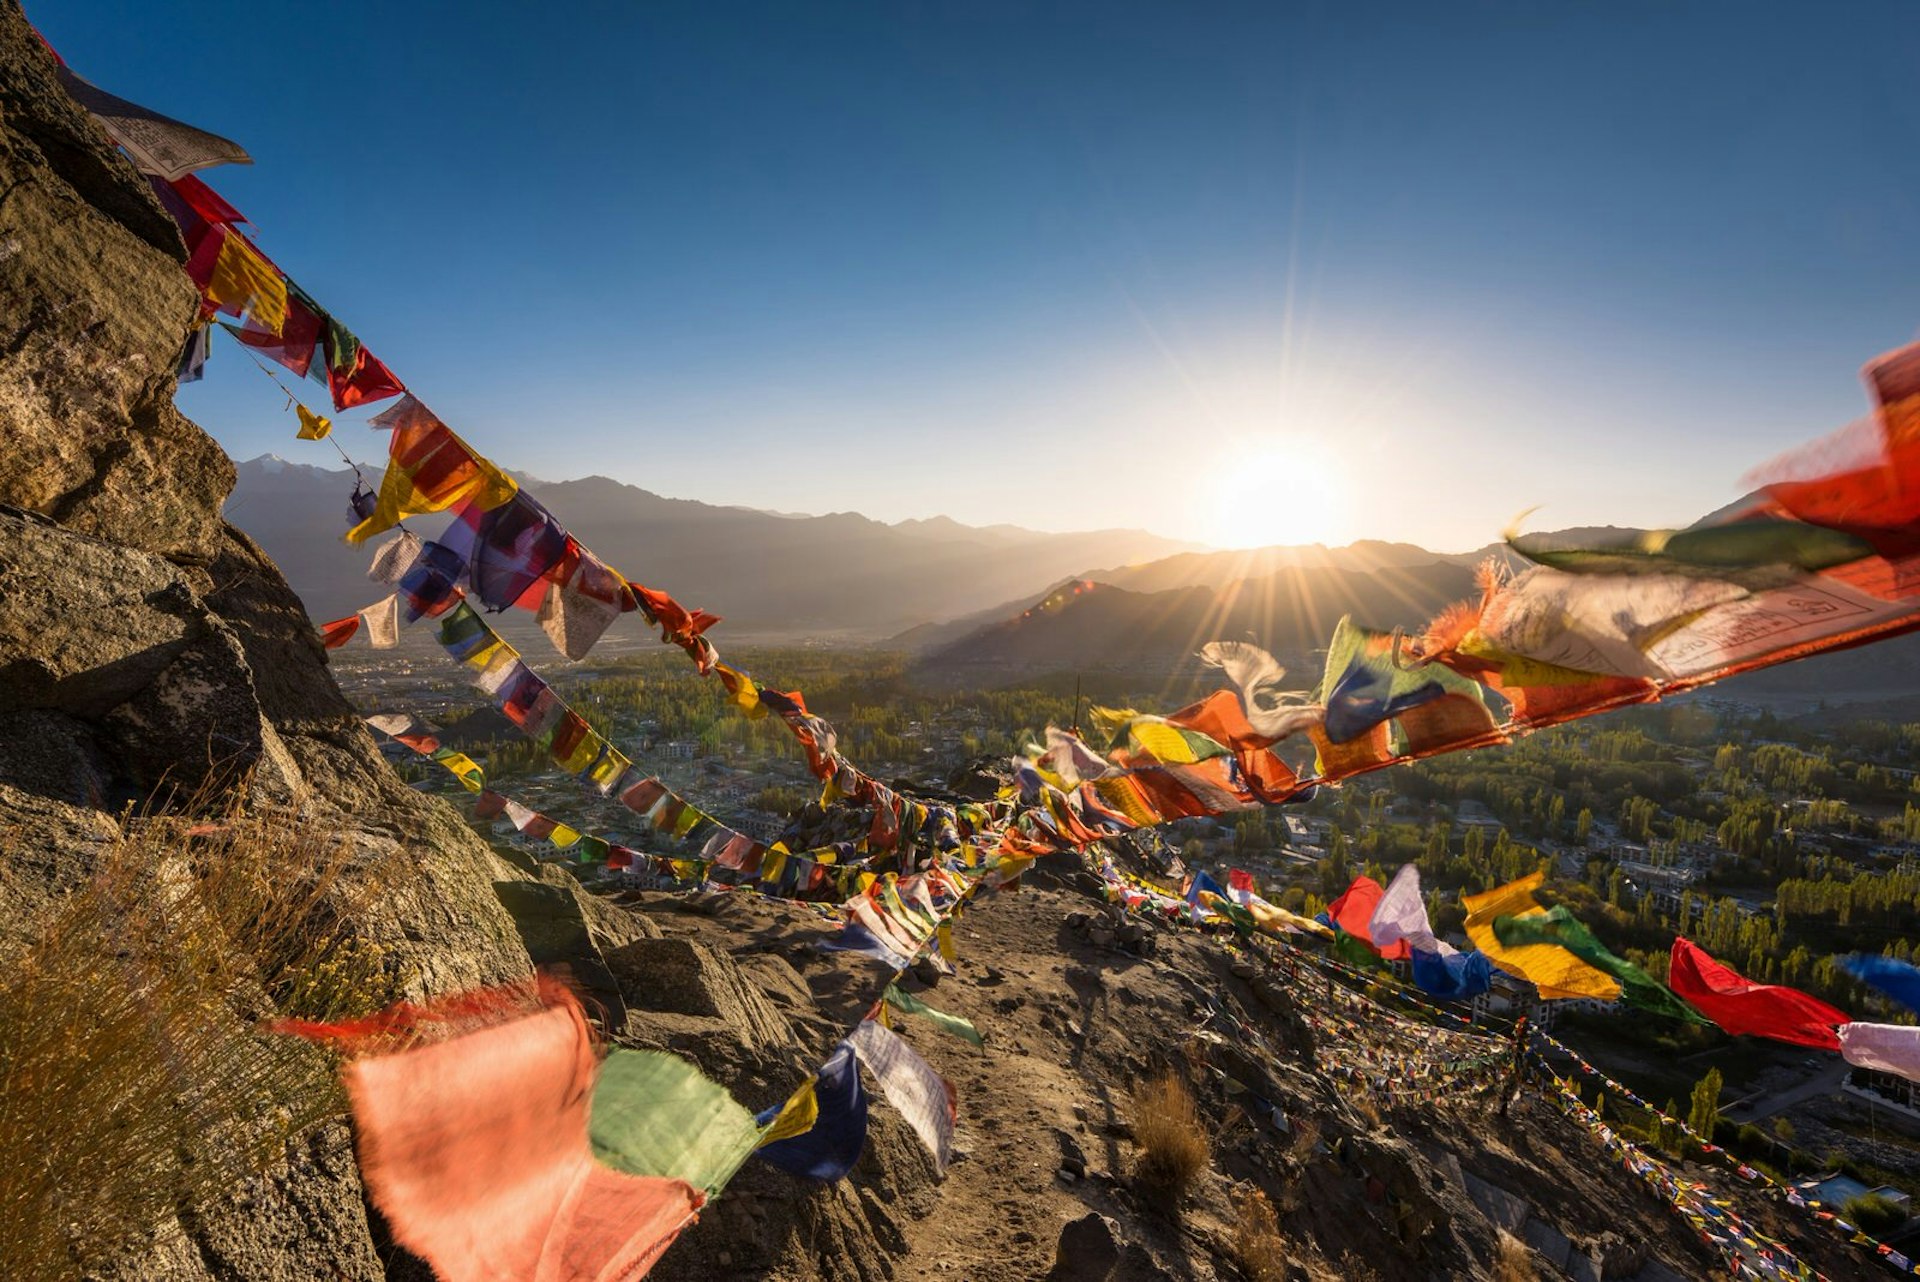 Colourful Buddhist prayer flags above Leh